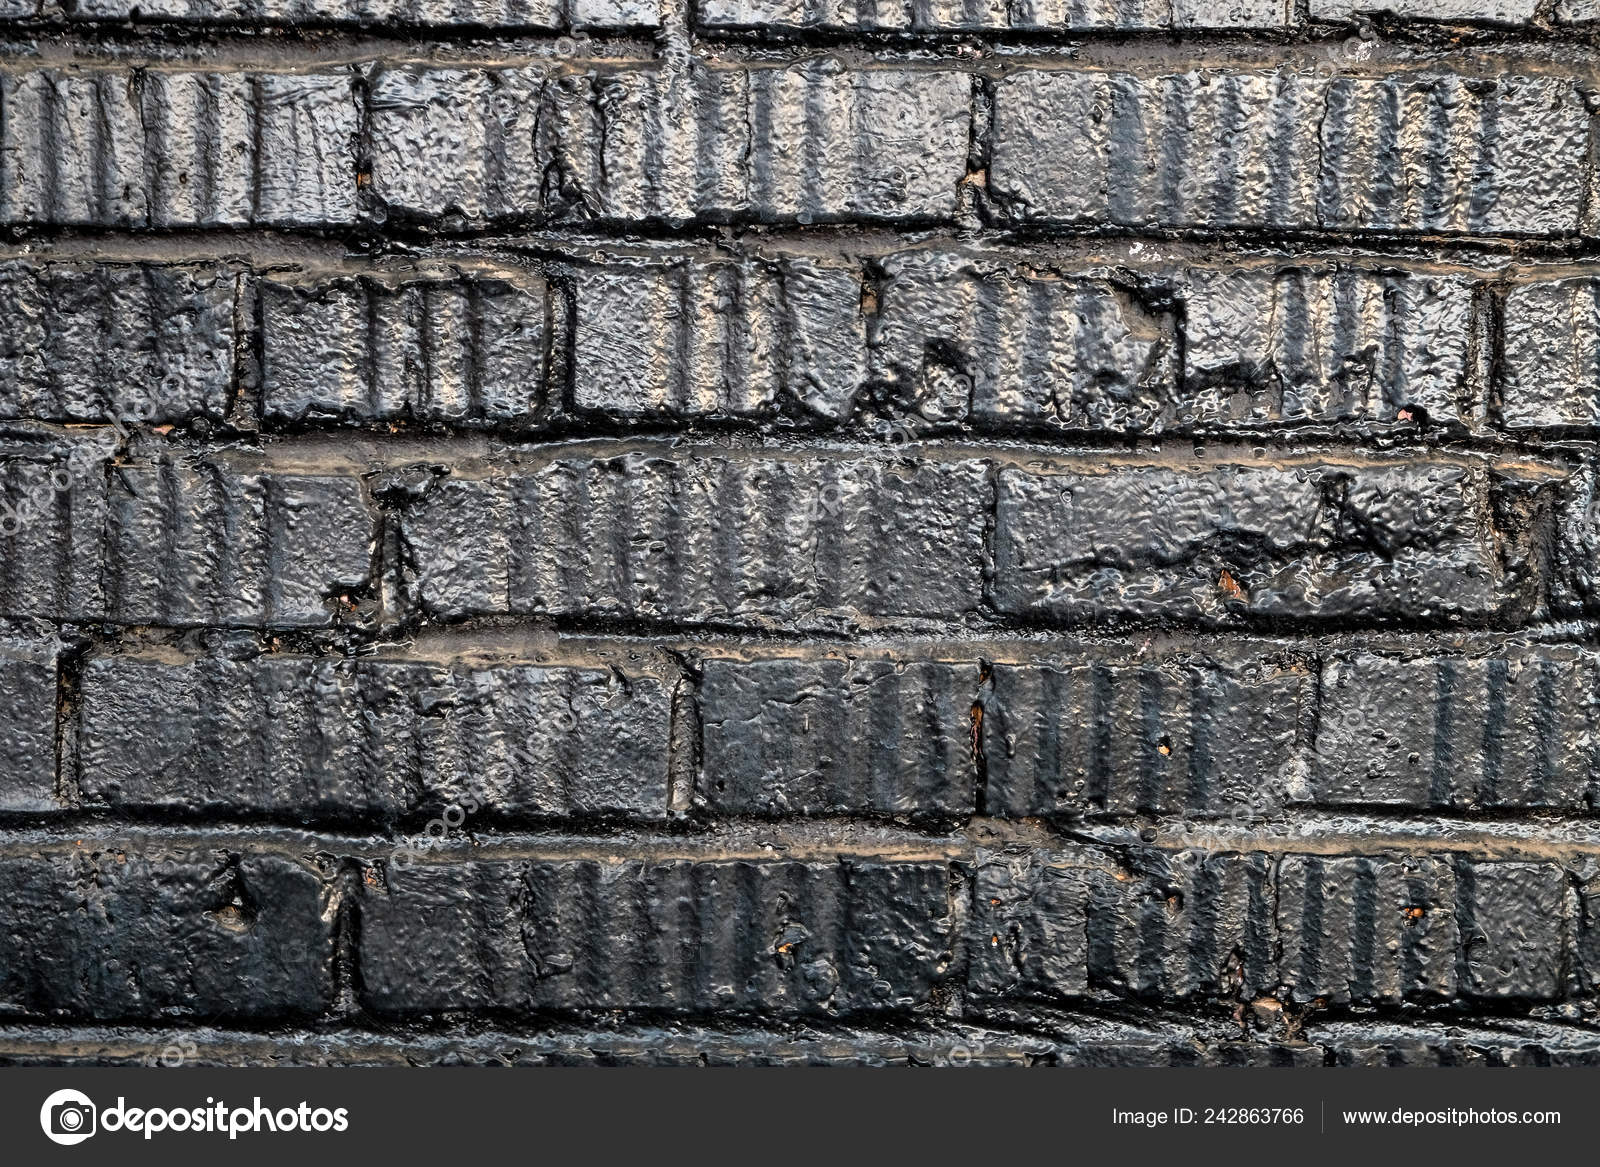 Black Brick Wall Interior Black Brick Wall In Vintage Style On Dark Background Rough Brick Wall Texture Brick Background Dark Black Black Brick Wall Background Vintage Brick Texture Home Interior Decor